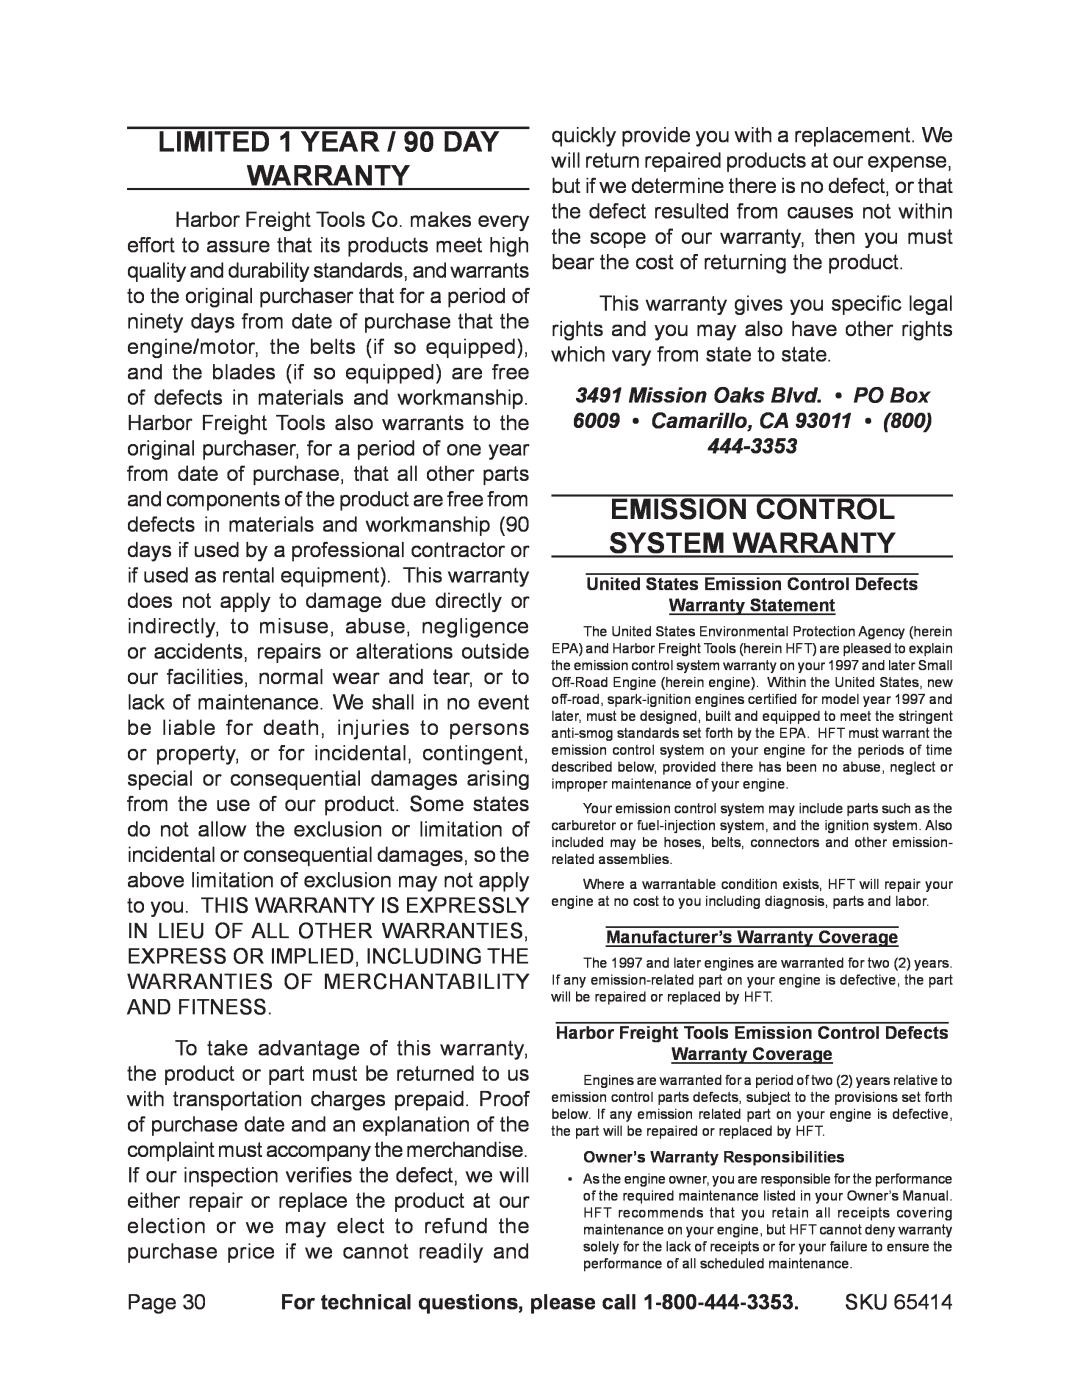 Chicago Electric 65414 manual Limited 1 year / 90 Day warranty, Emission Control System Warranty 